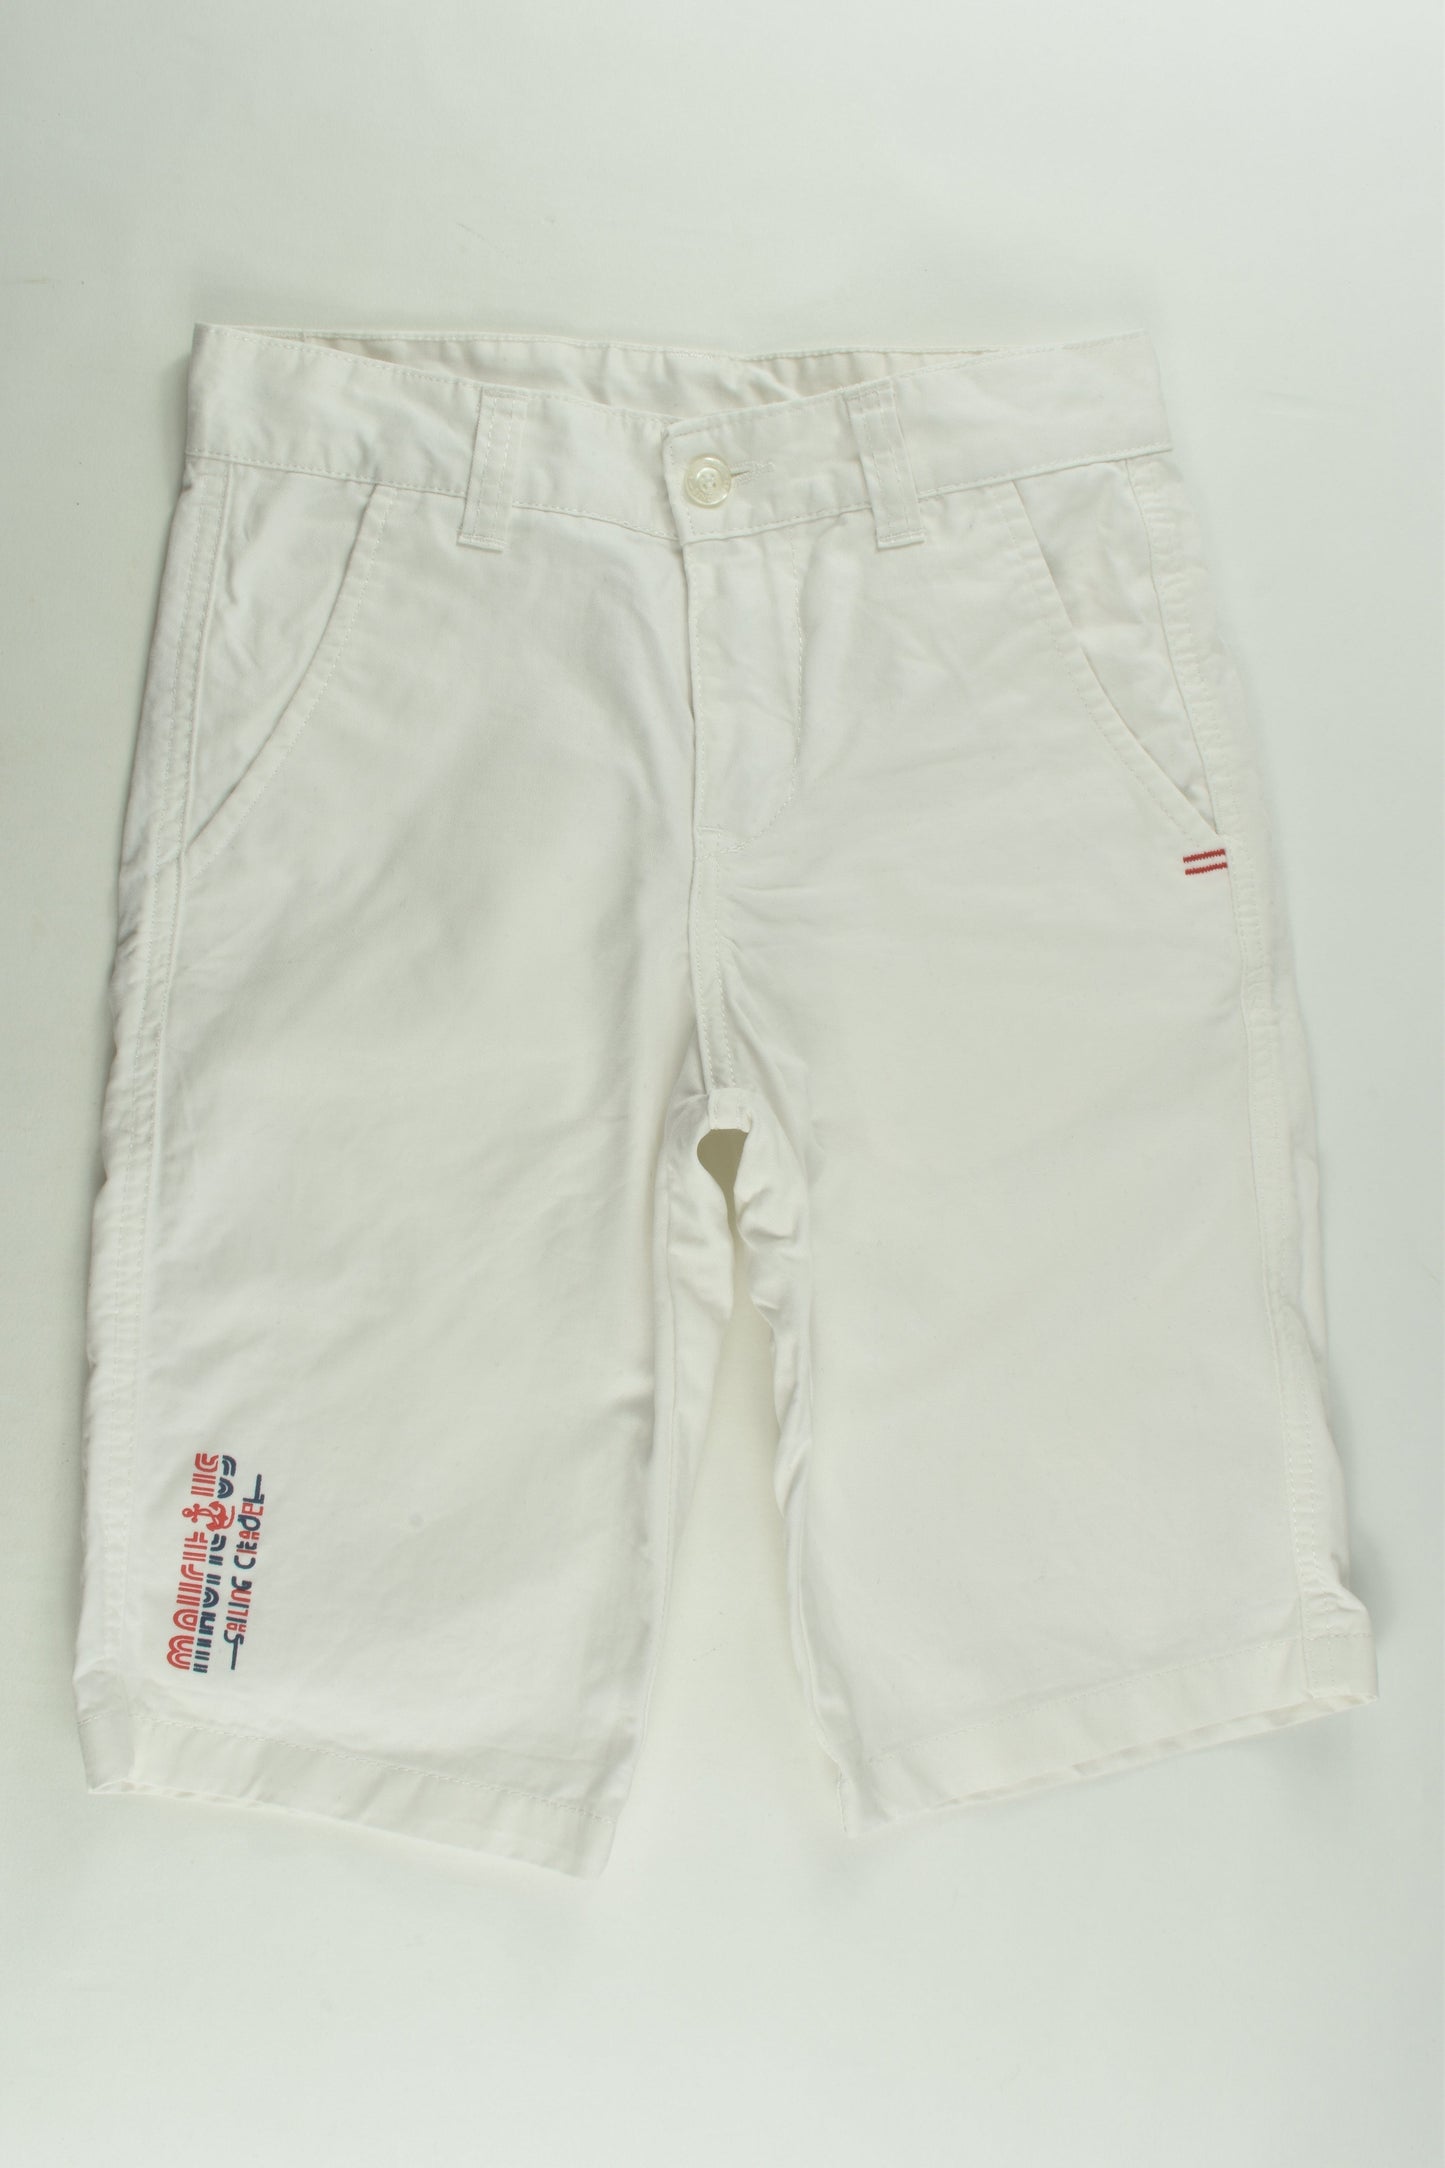 Citadel Size 10 White Nautical Chino Shorts